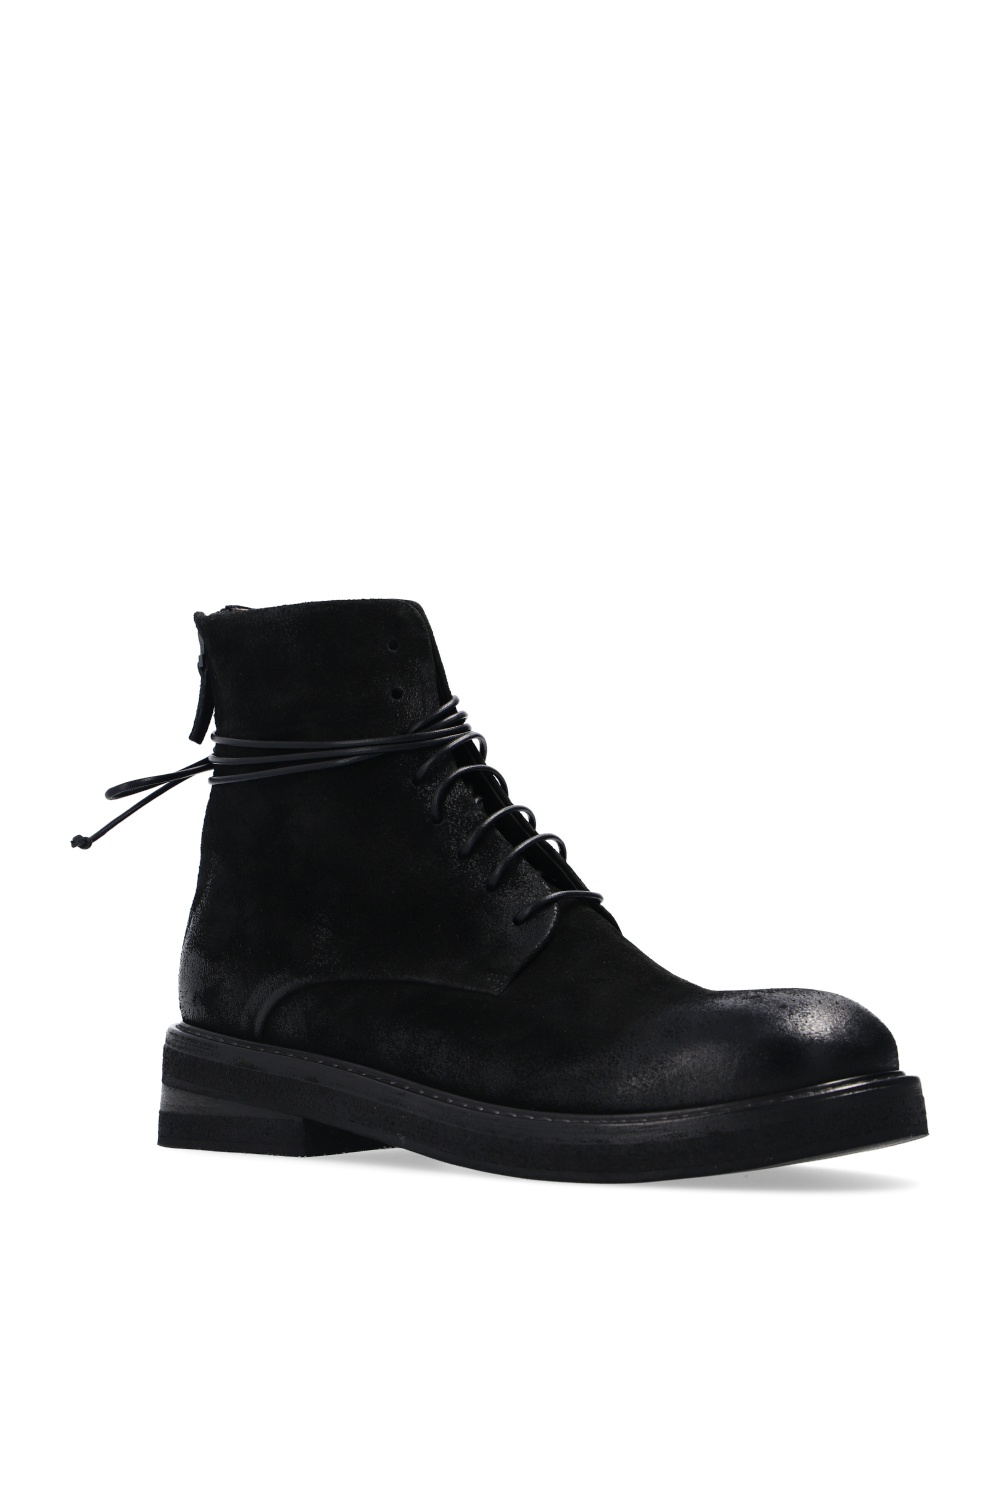 Marsell ‘Parrucca’ platform ankle boots